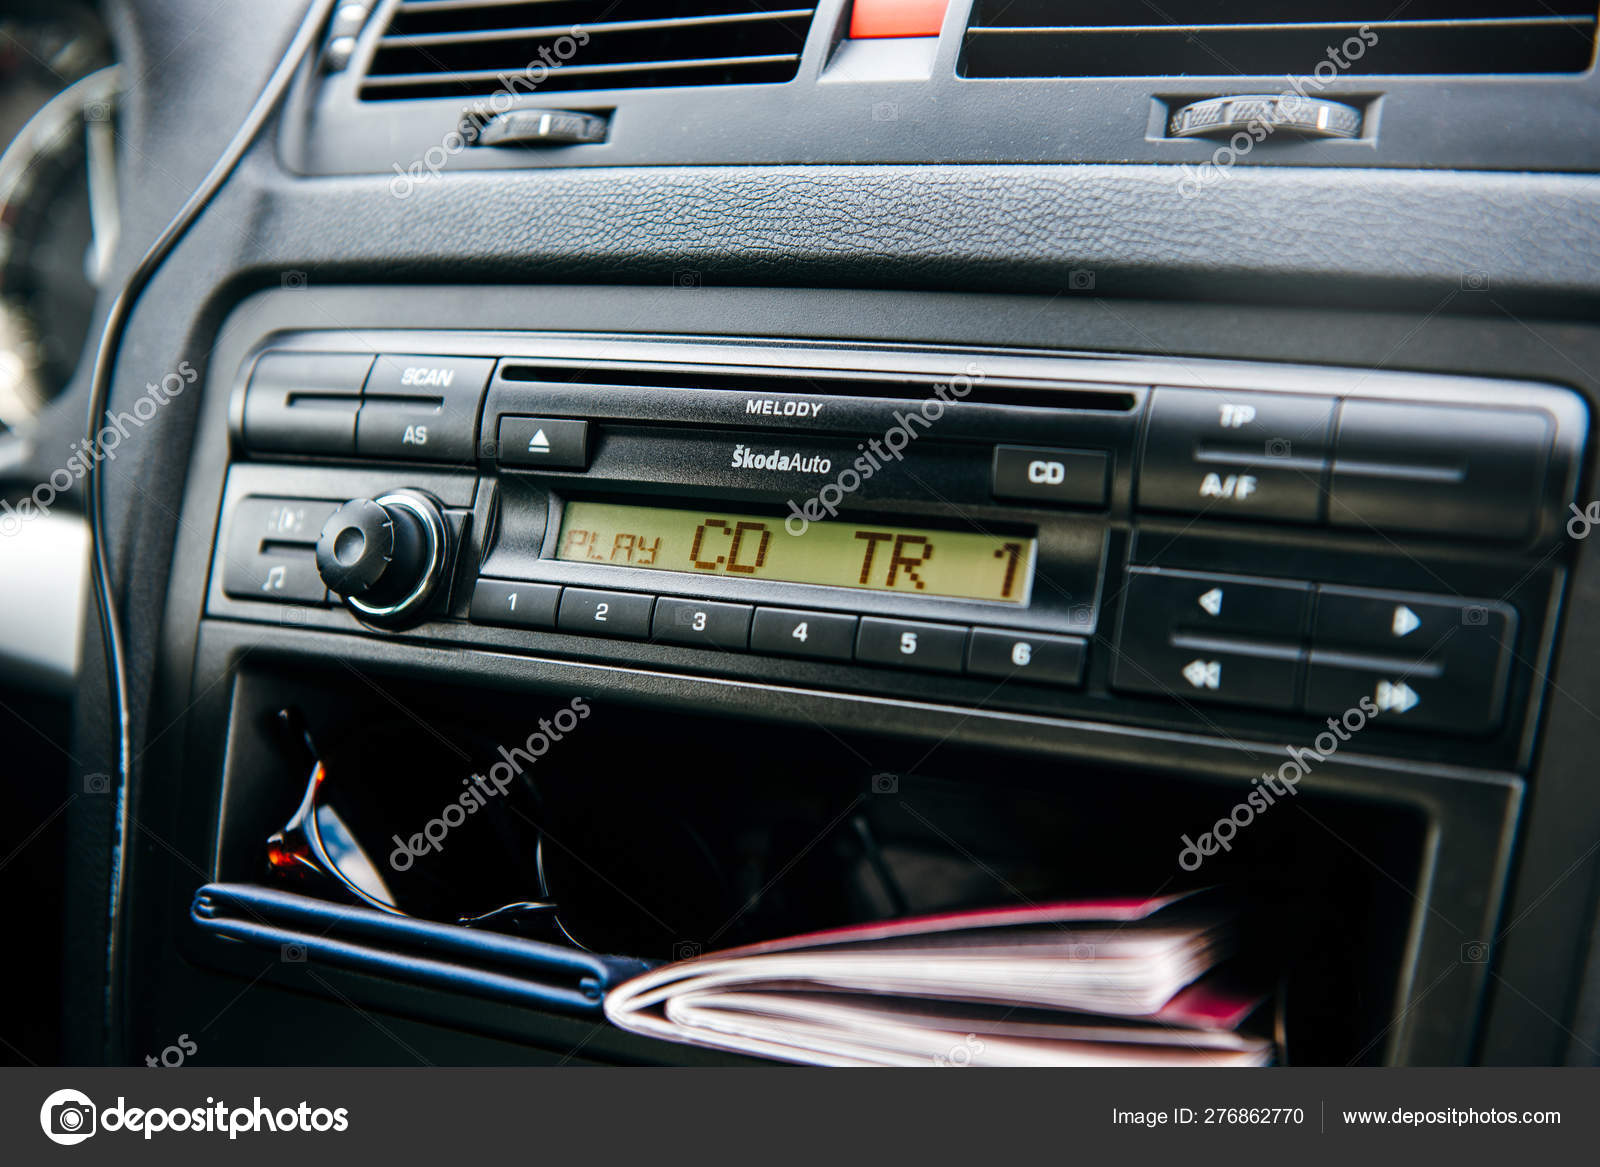 Onbekwaamheid Quagga Ongepast New modern Skoda Melody auto radio with CD track – Stock Editorial Photo ©  ifeelstock #276862770